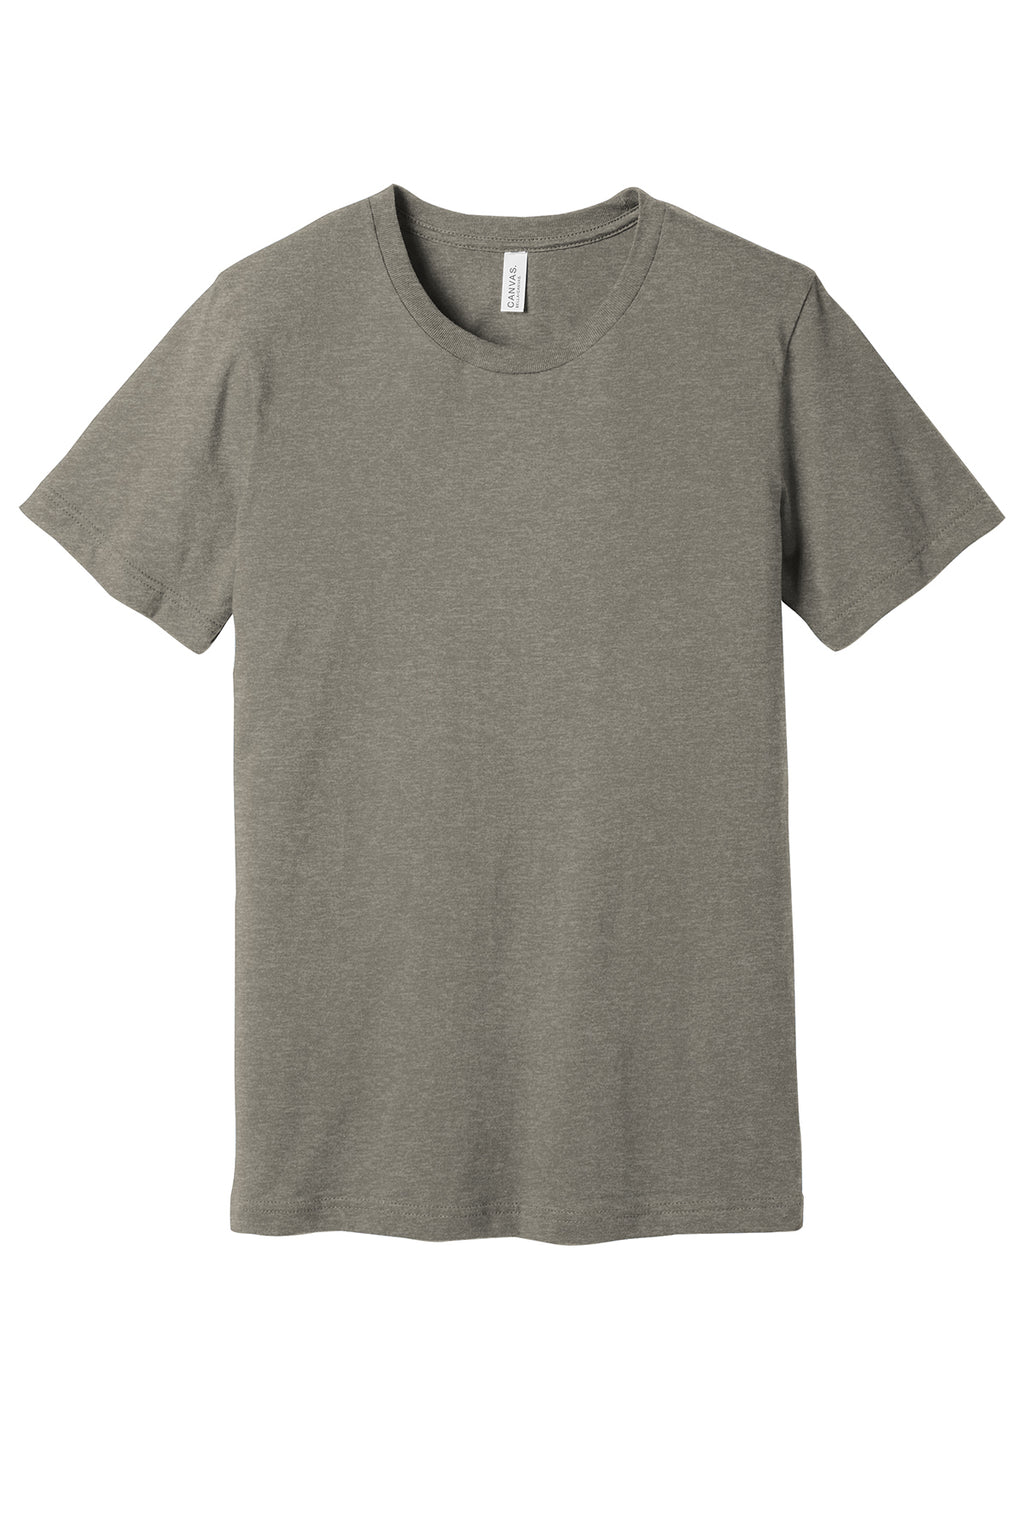 Bella Canvas Mens/Unisex Cotton Short Sleeve Shirts Heather Stone